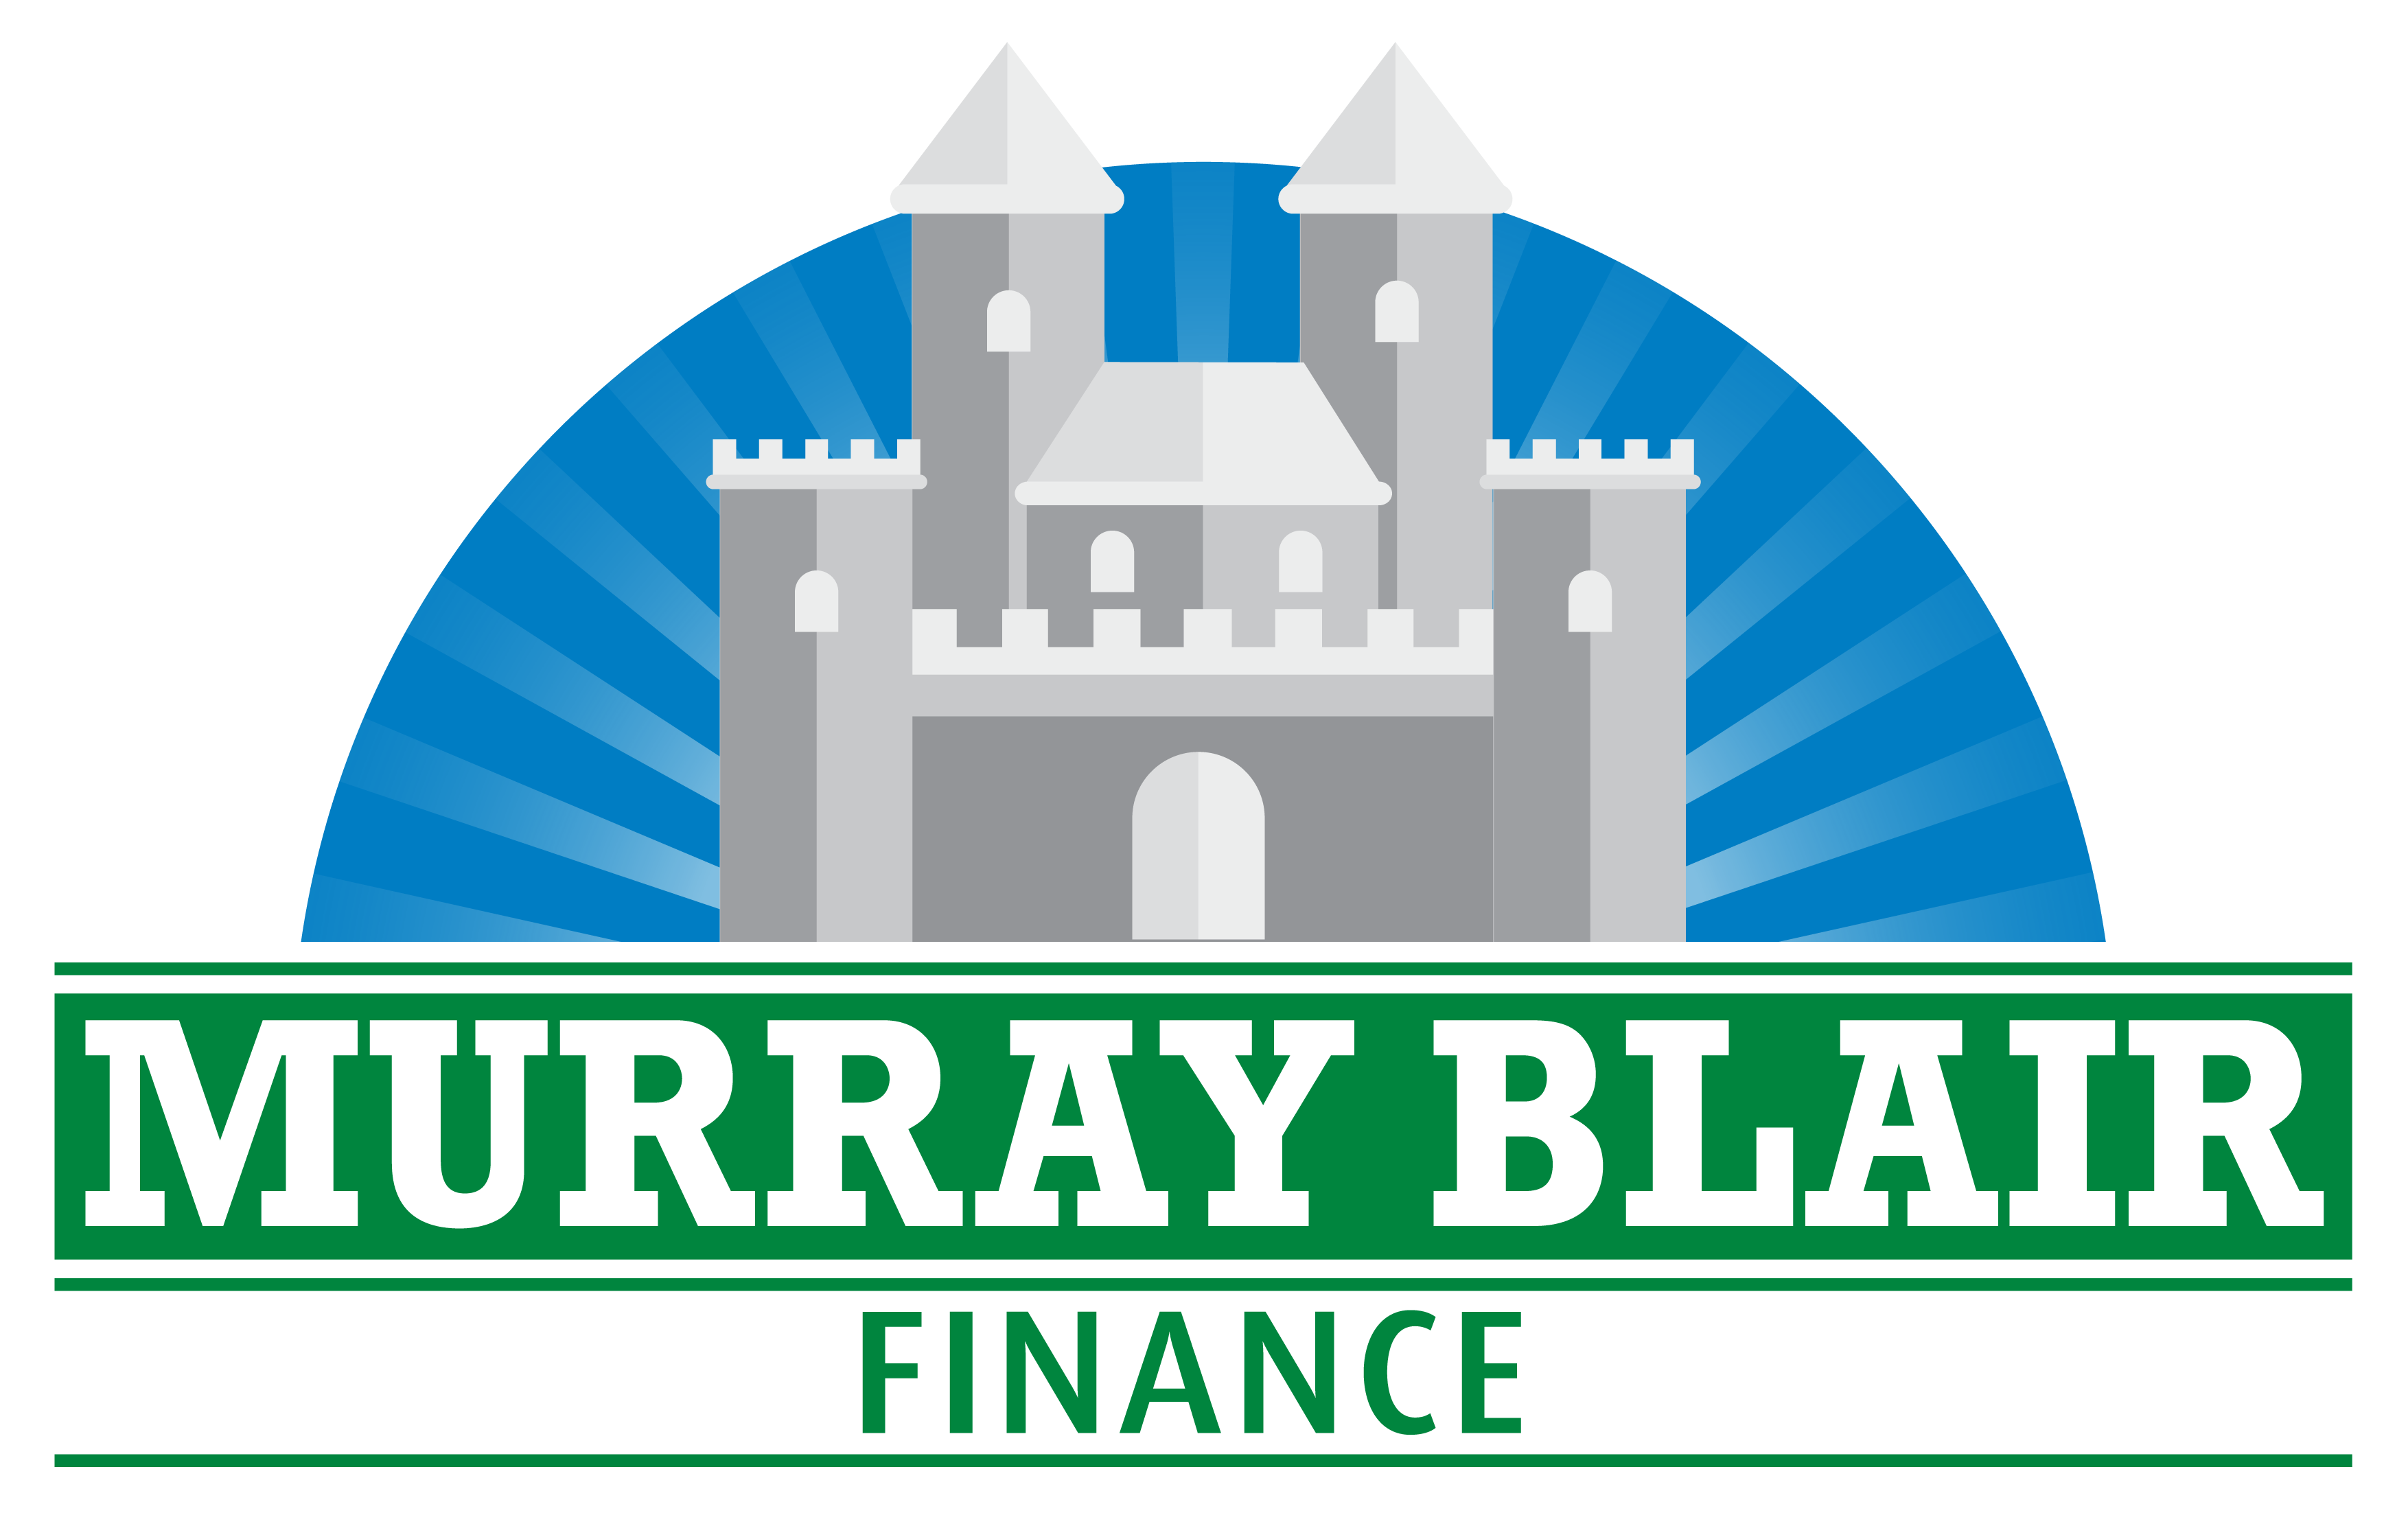 Murray Blair Finance